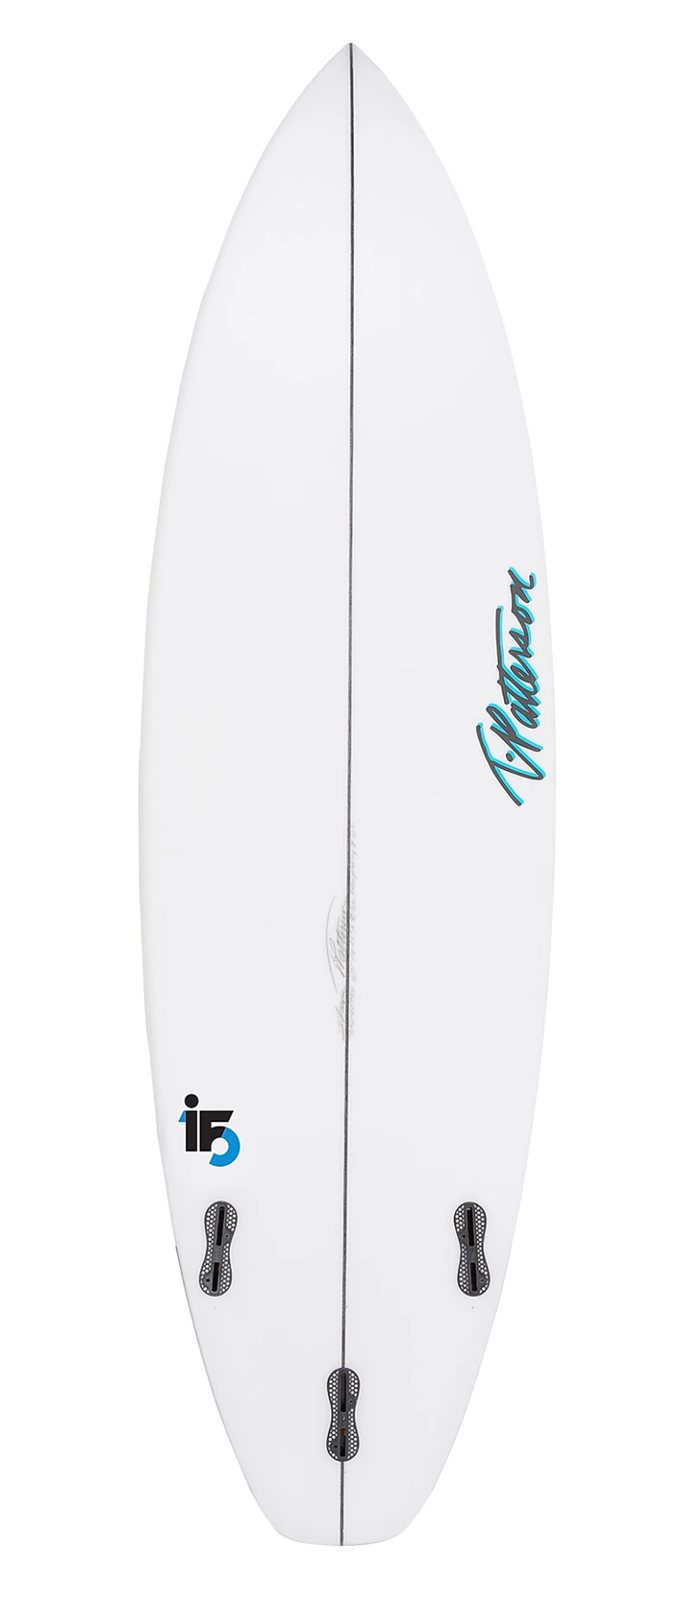 POOL PARTY - 2 surfboard model bottom